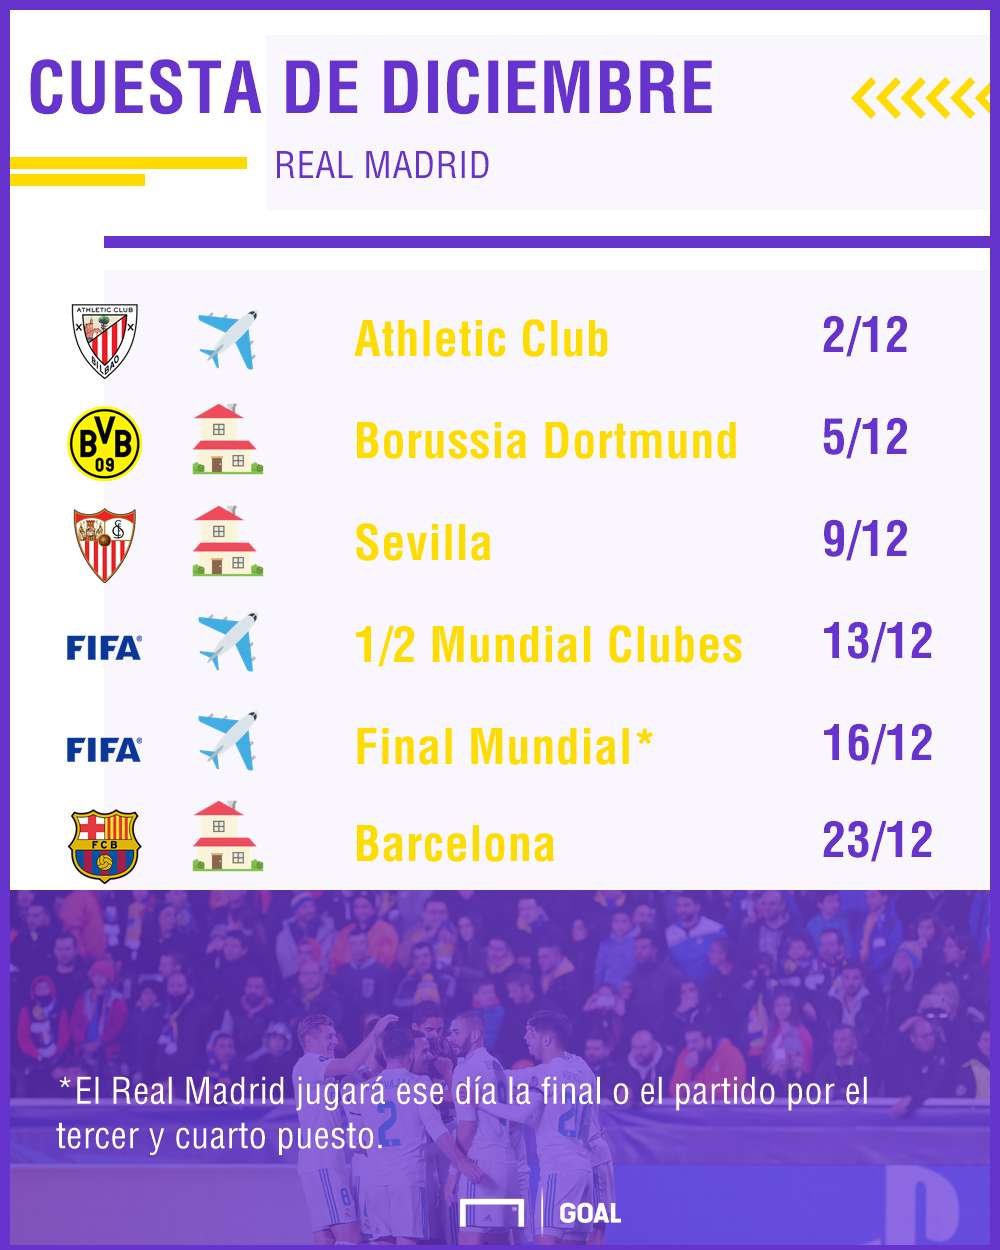 GFX Cuesta diciembre Real Madrid